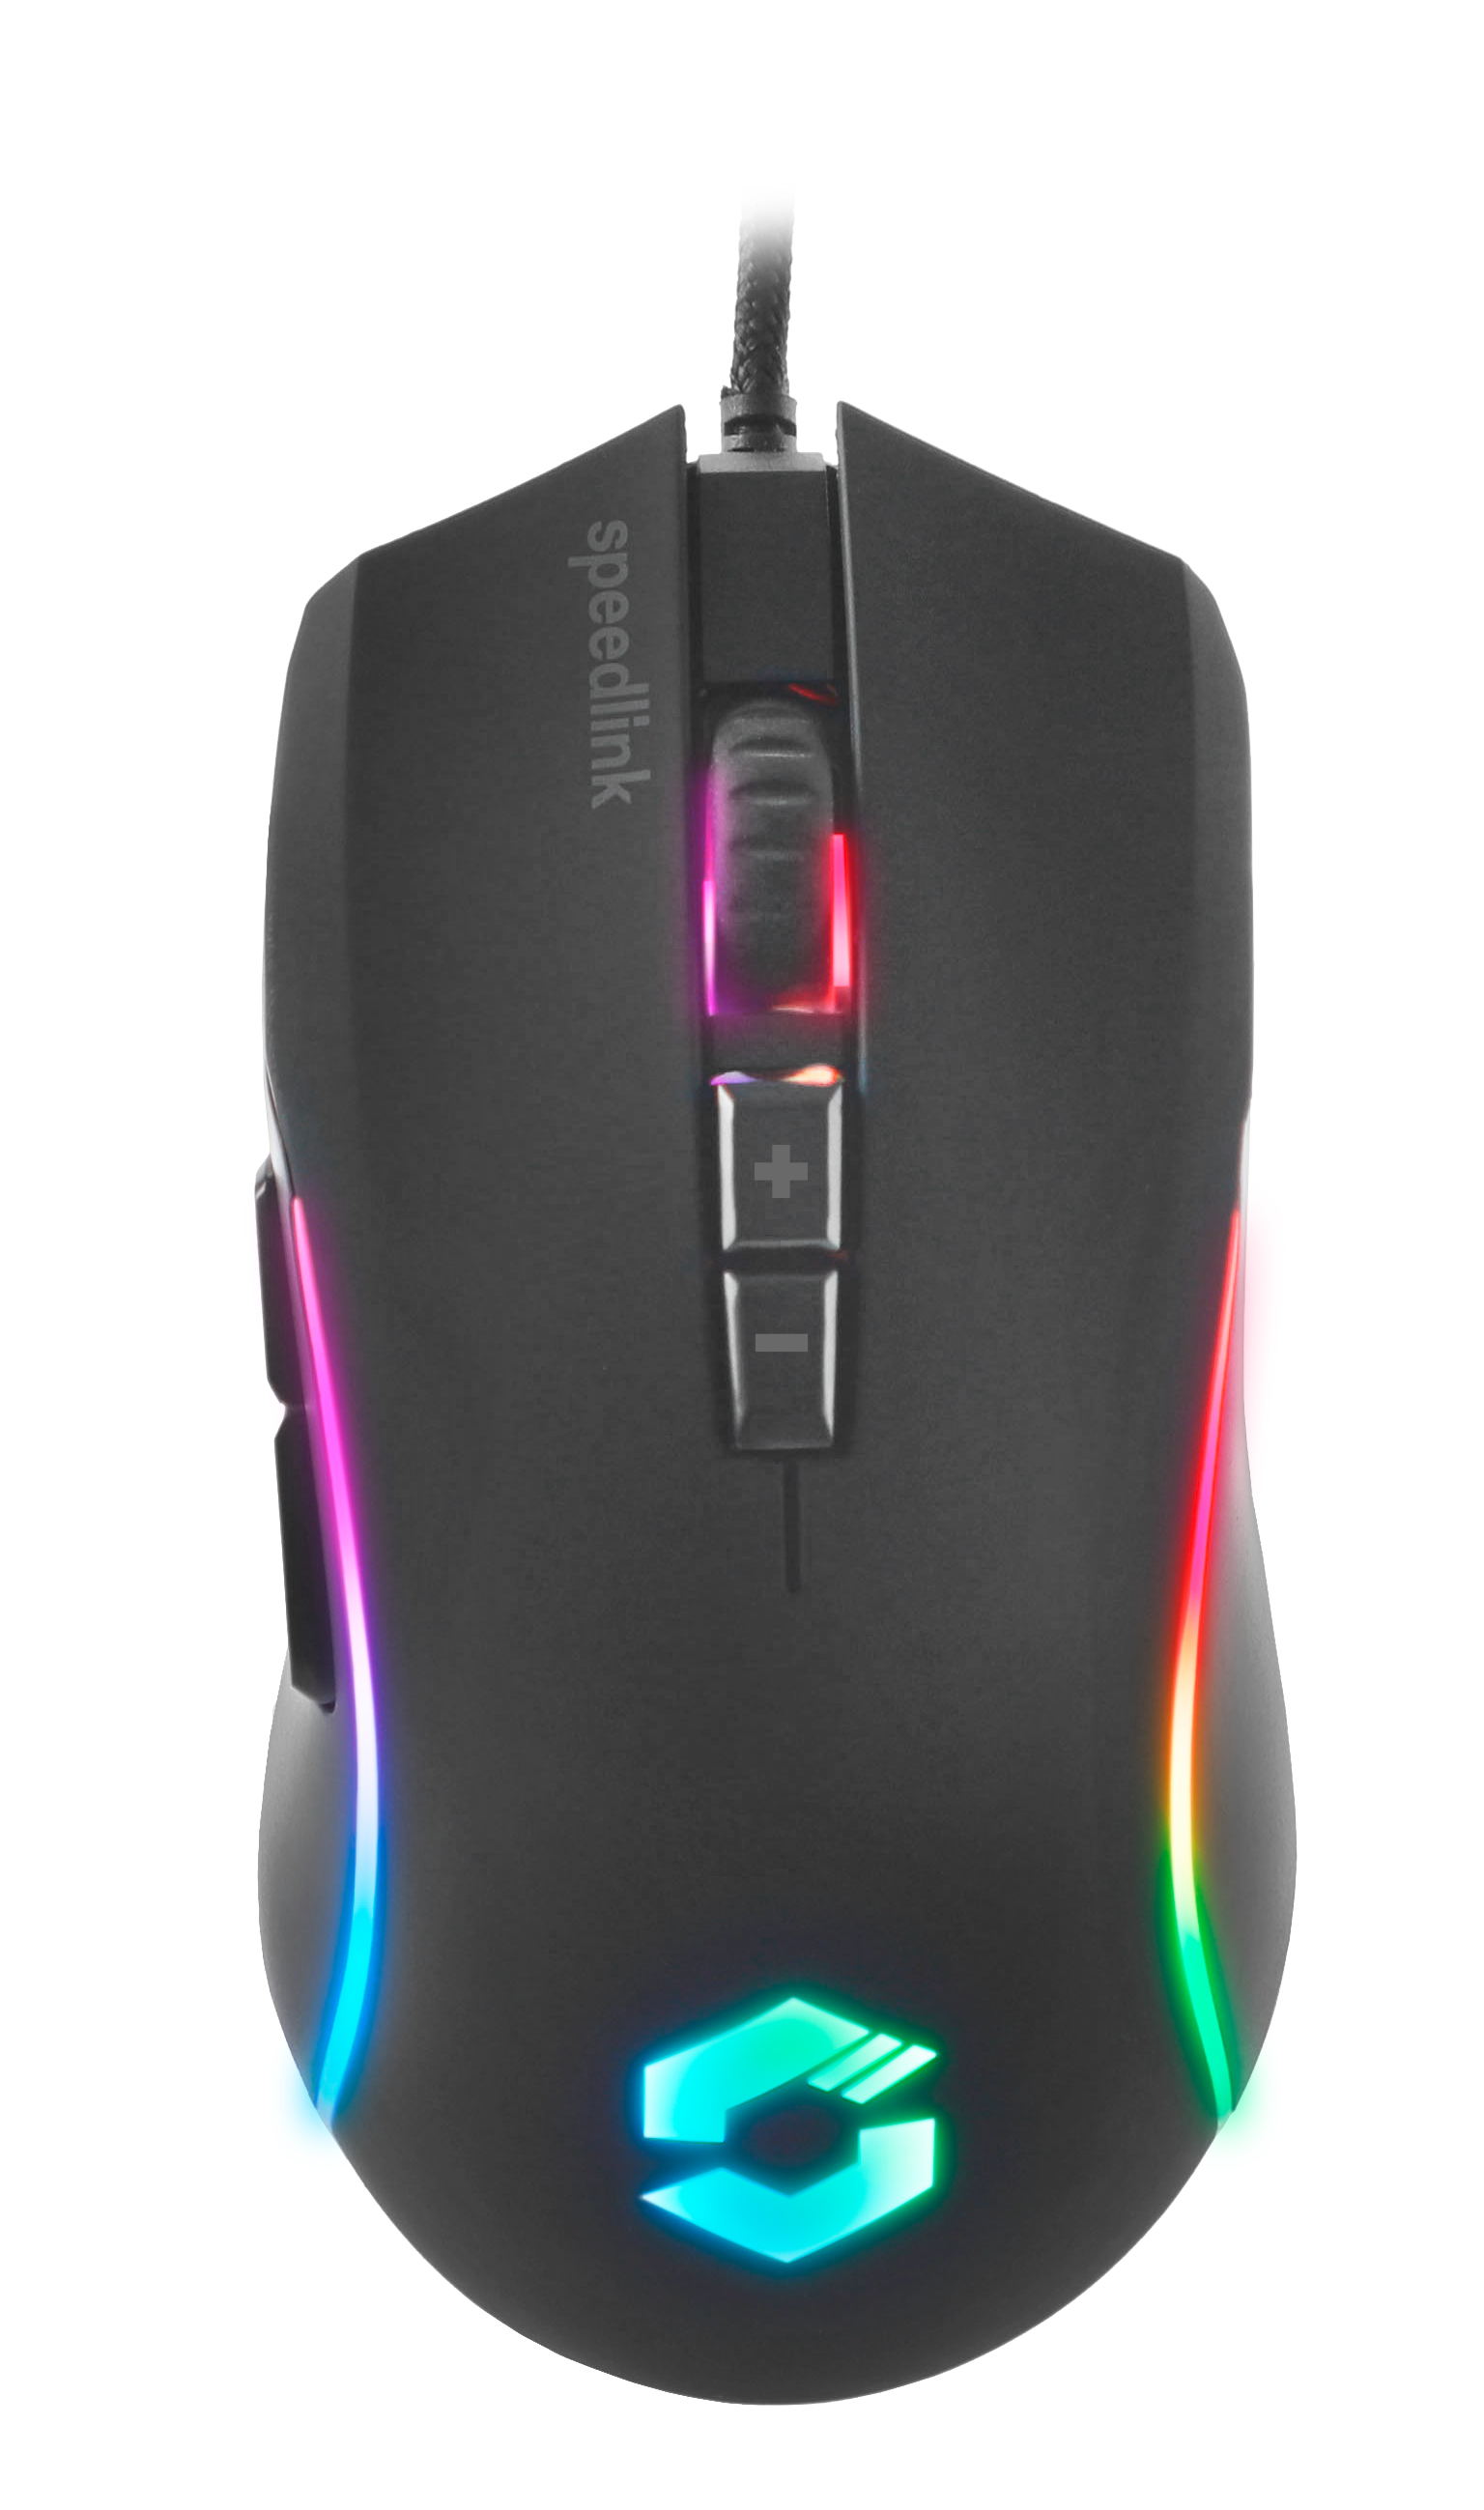 SPEEDLINK ZAVOS Gaming Mouse SL-680022-RRBK Wired, Rubber-Black